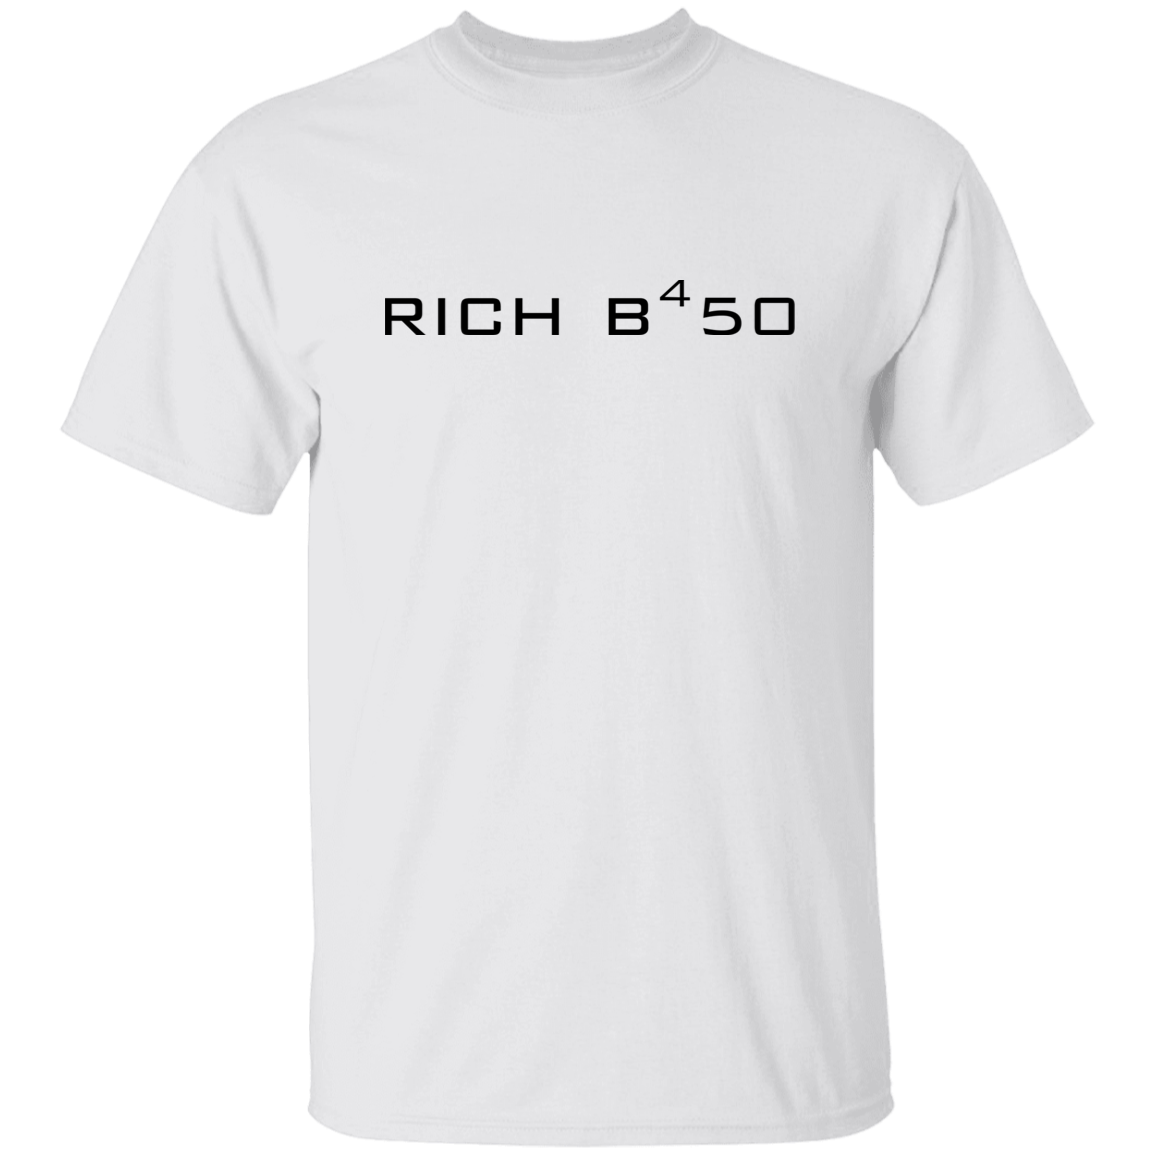 RB450 RICH 5.3 oz. T-Shirt